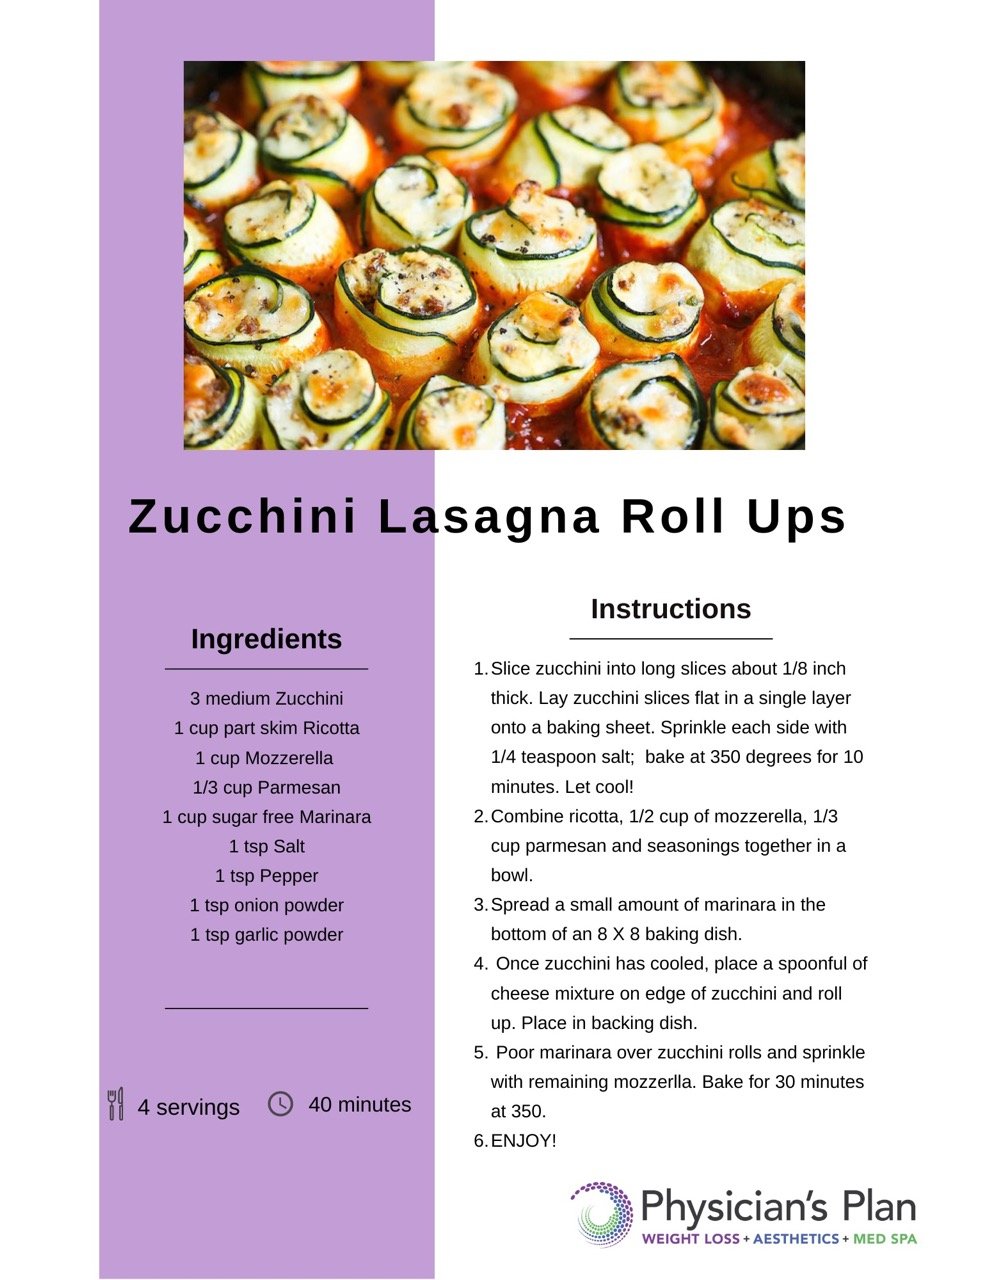 Zucchini Lasagna Roll Ups (8.5 × 11 in) Large